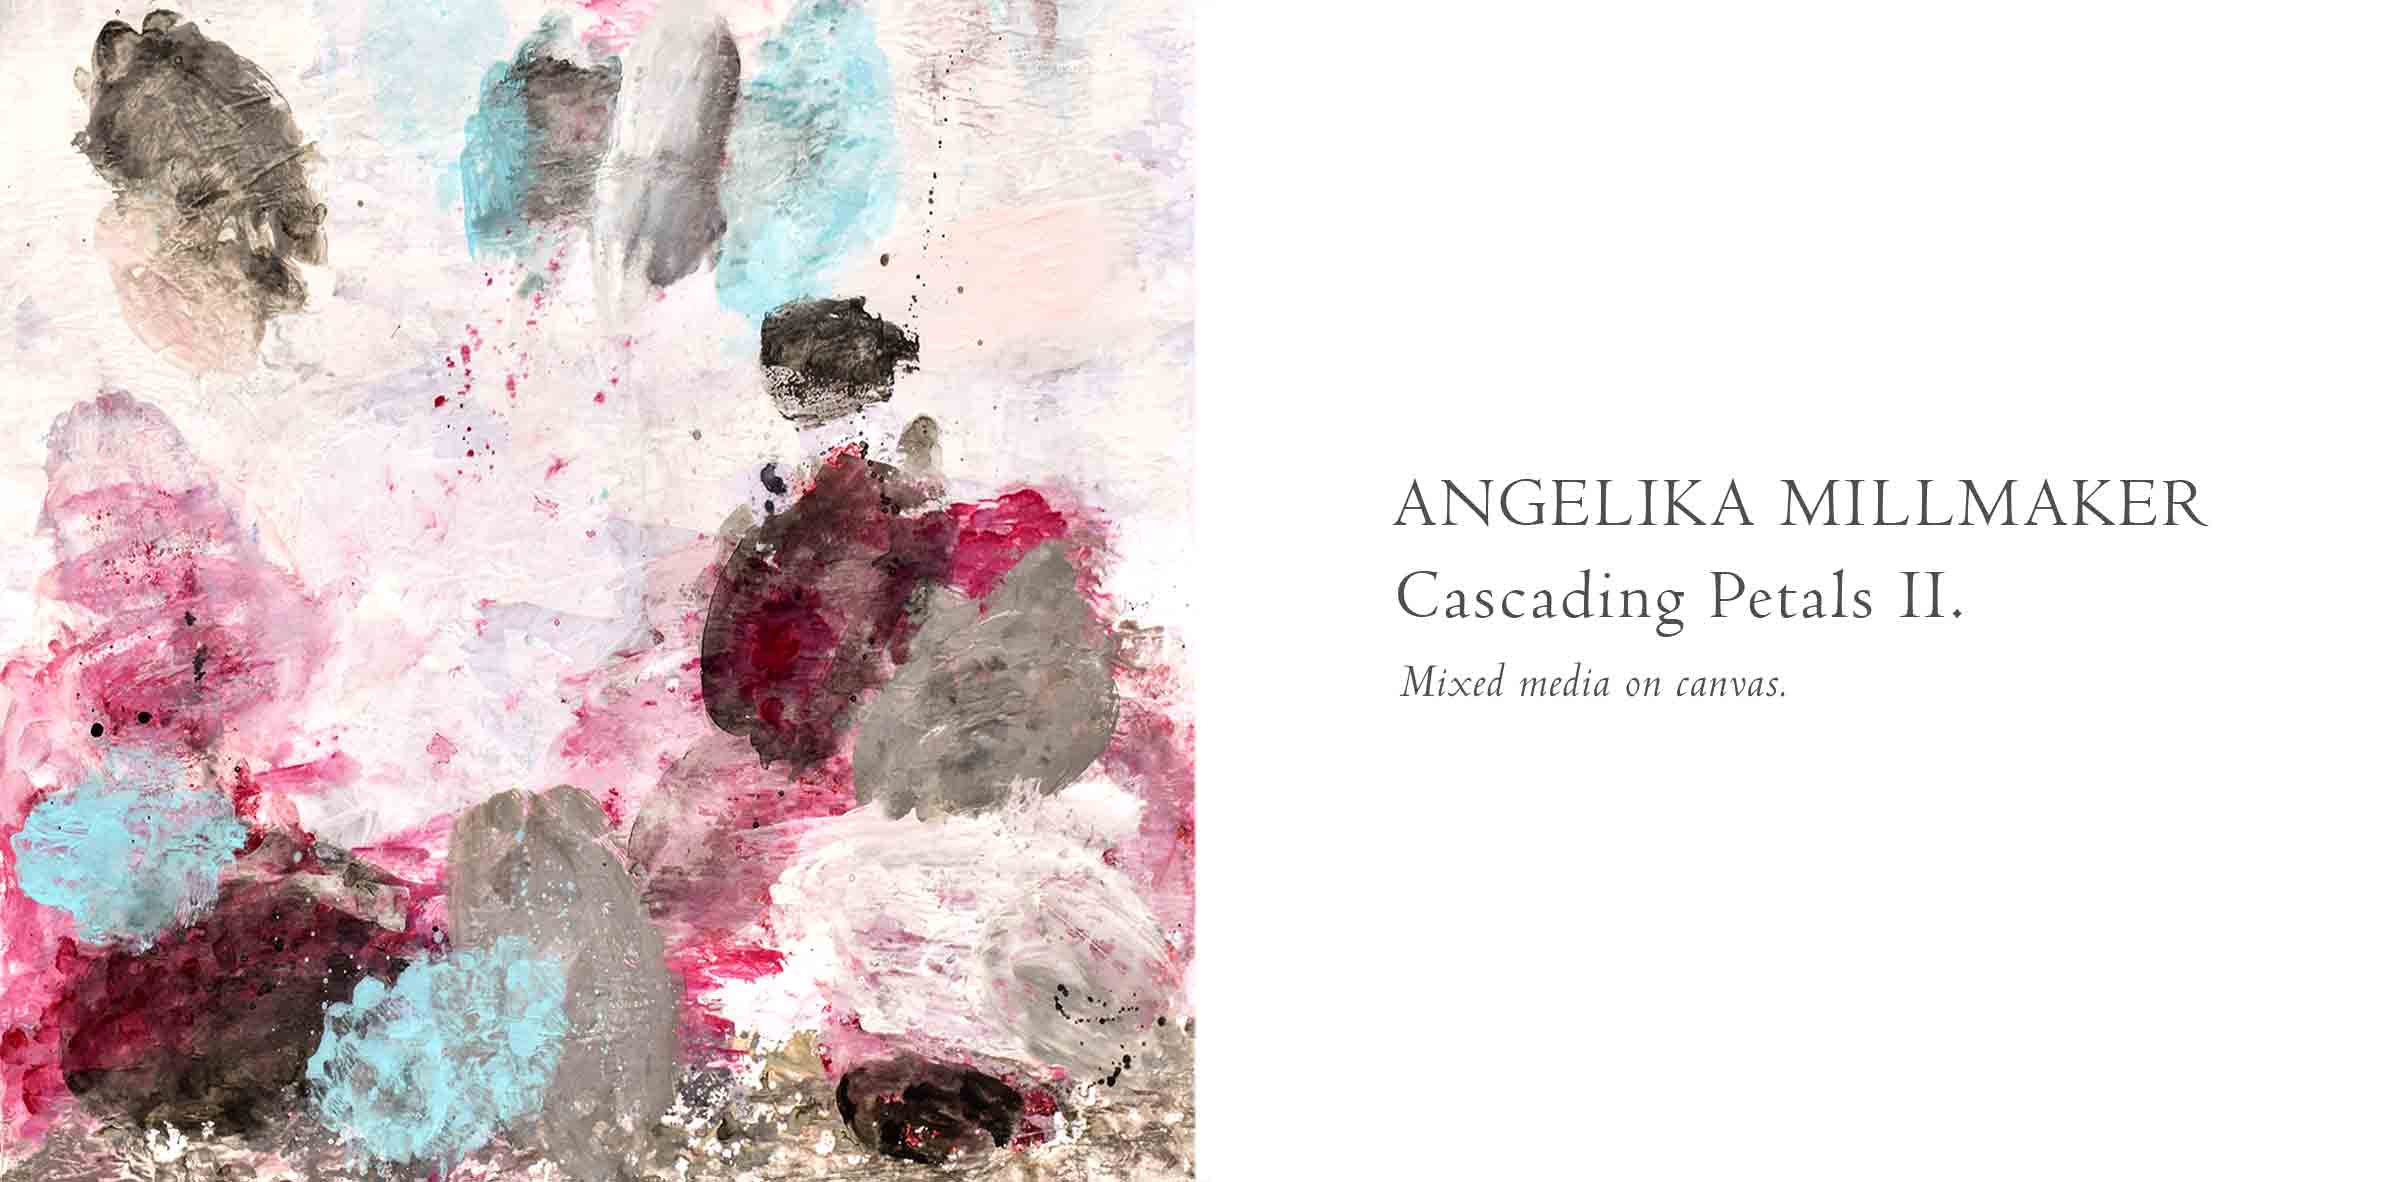 The-Whisper-Gallery-Summertime-Showtime-Angelika-Millmaker-Cascading-Petals-II-detail